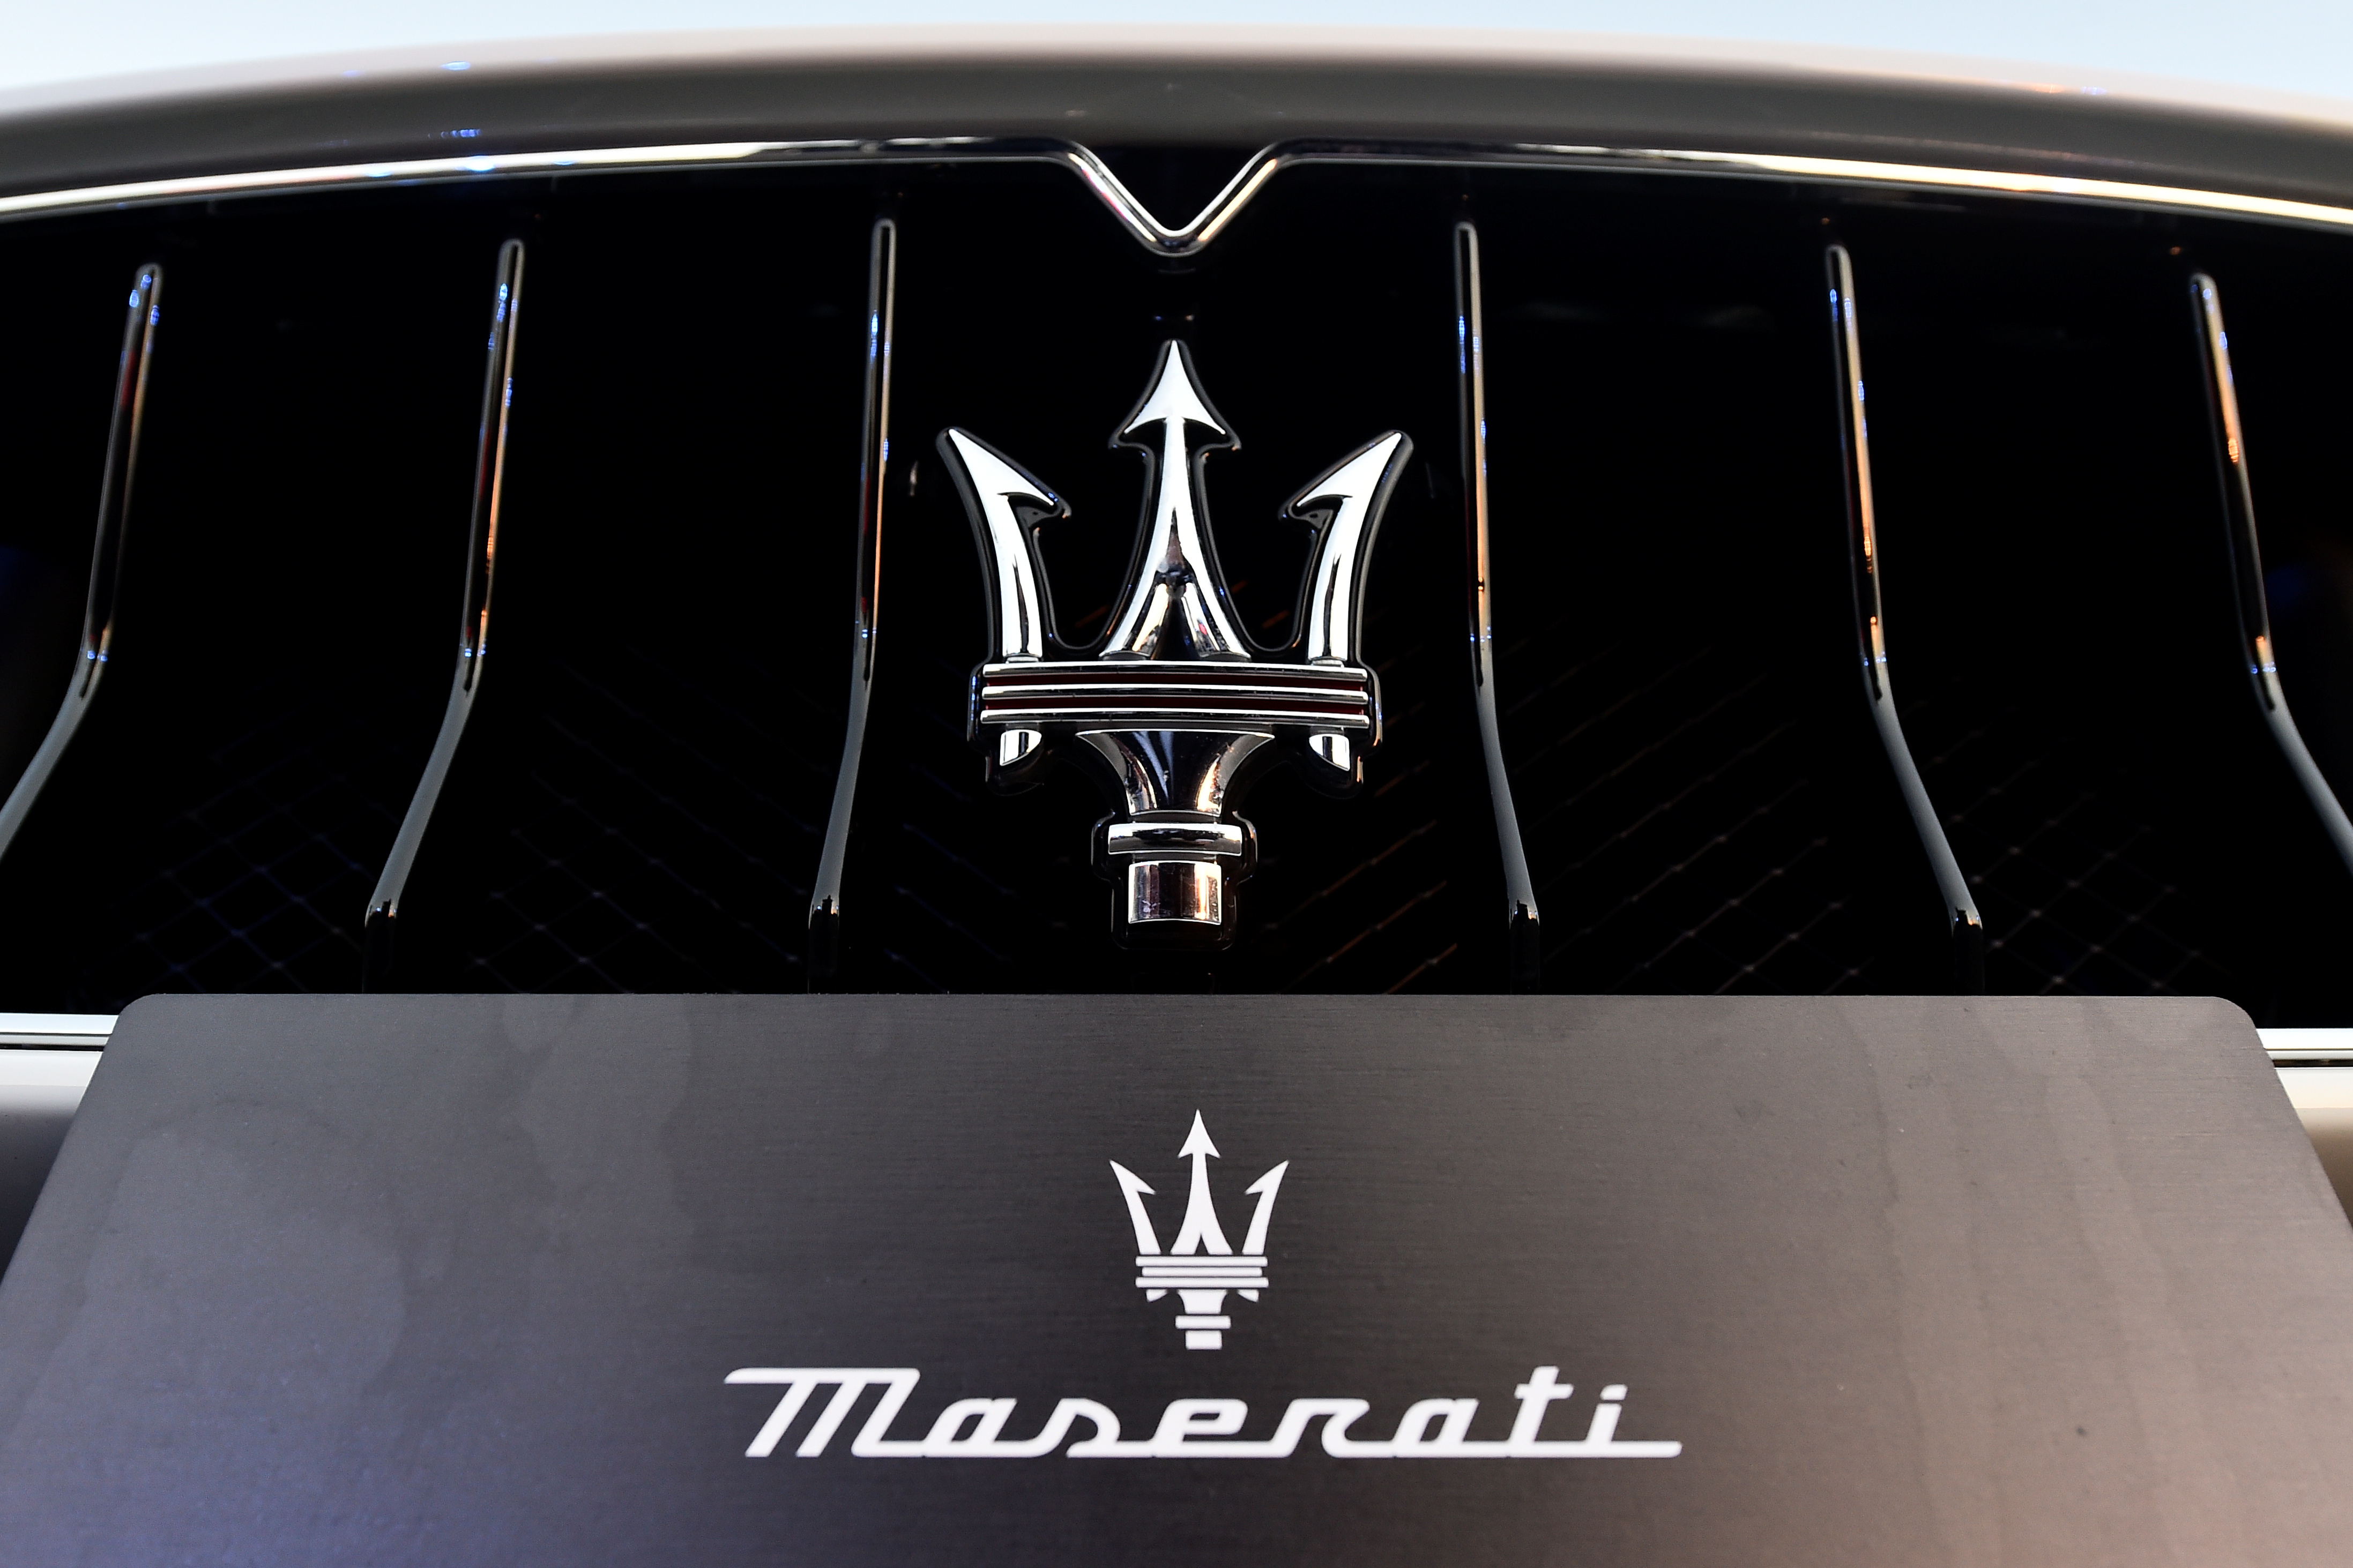 Maserati unveils its new MC20 super sports car